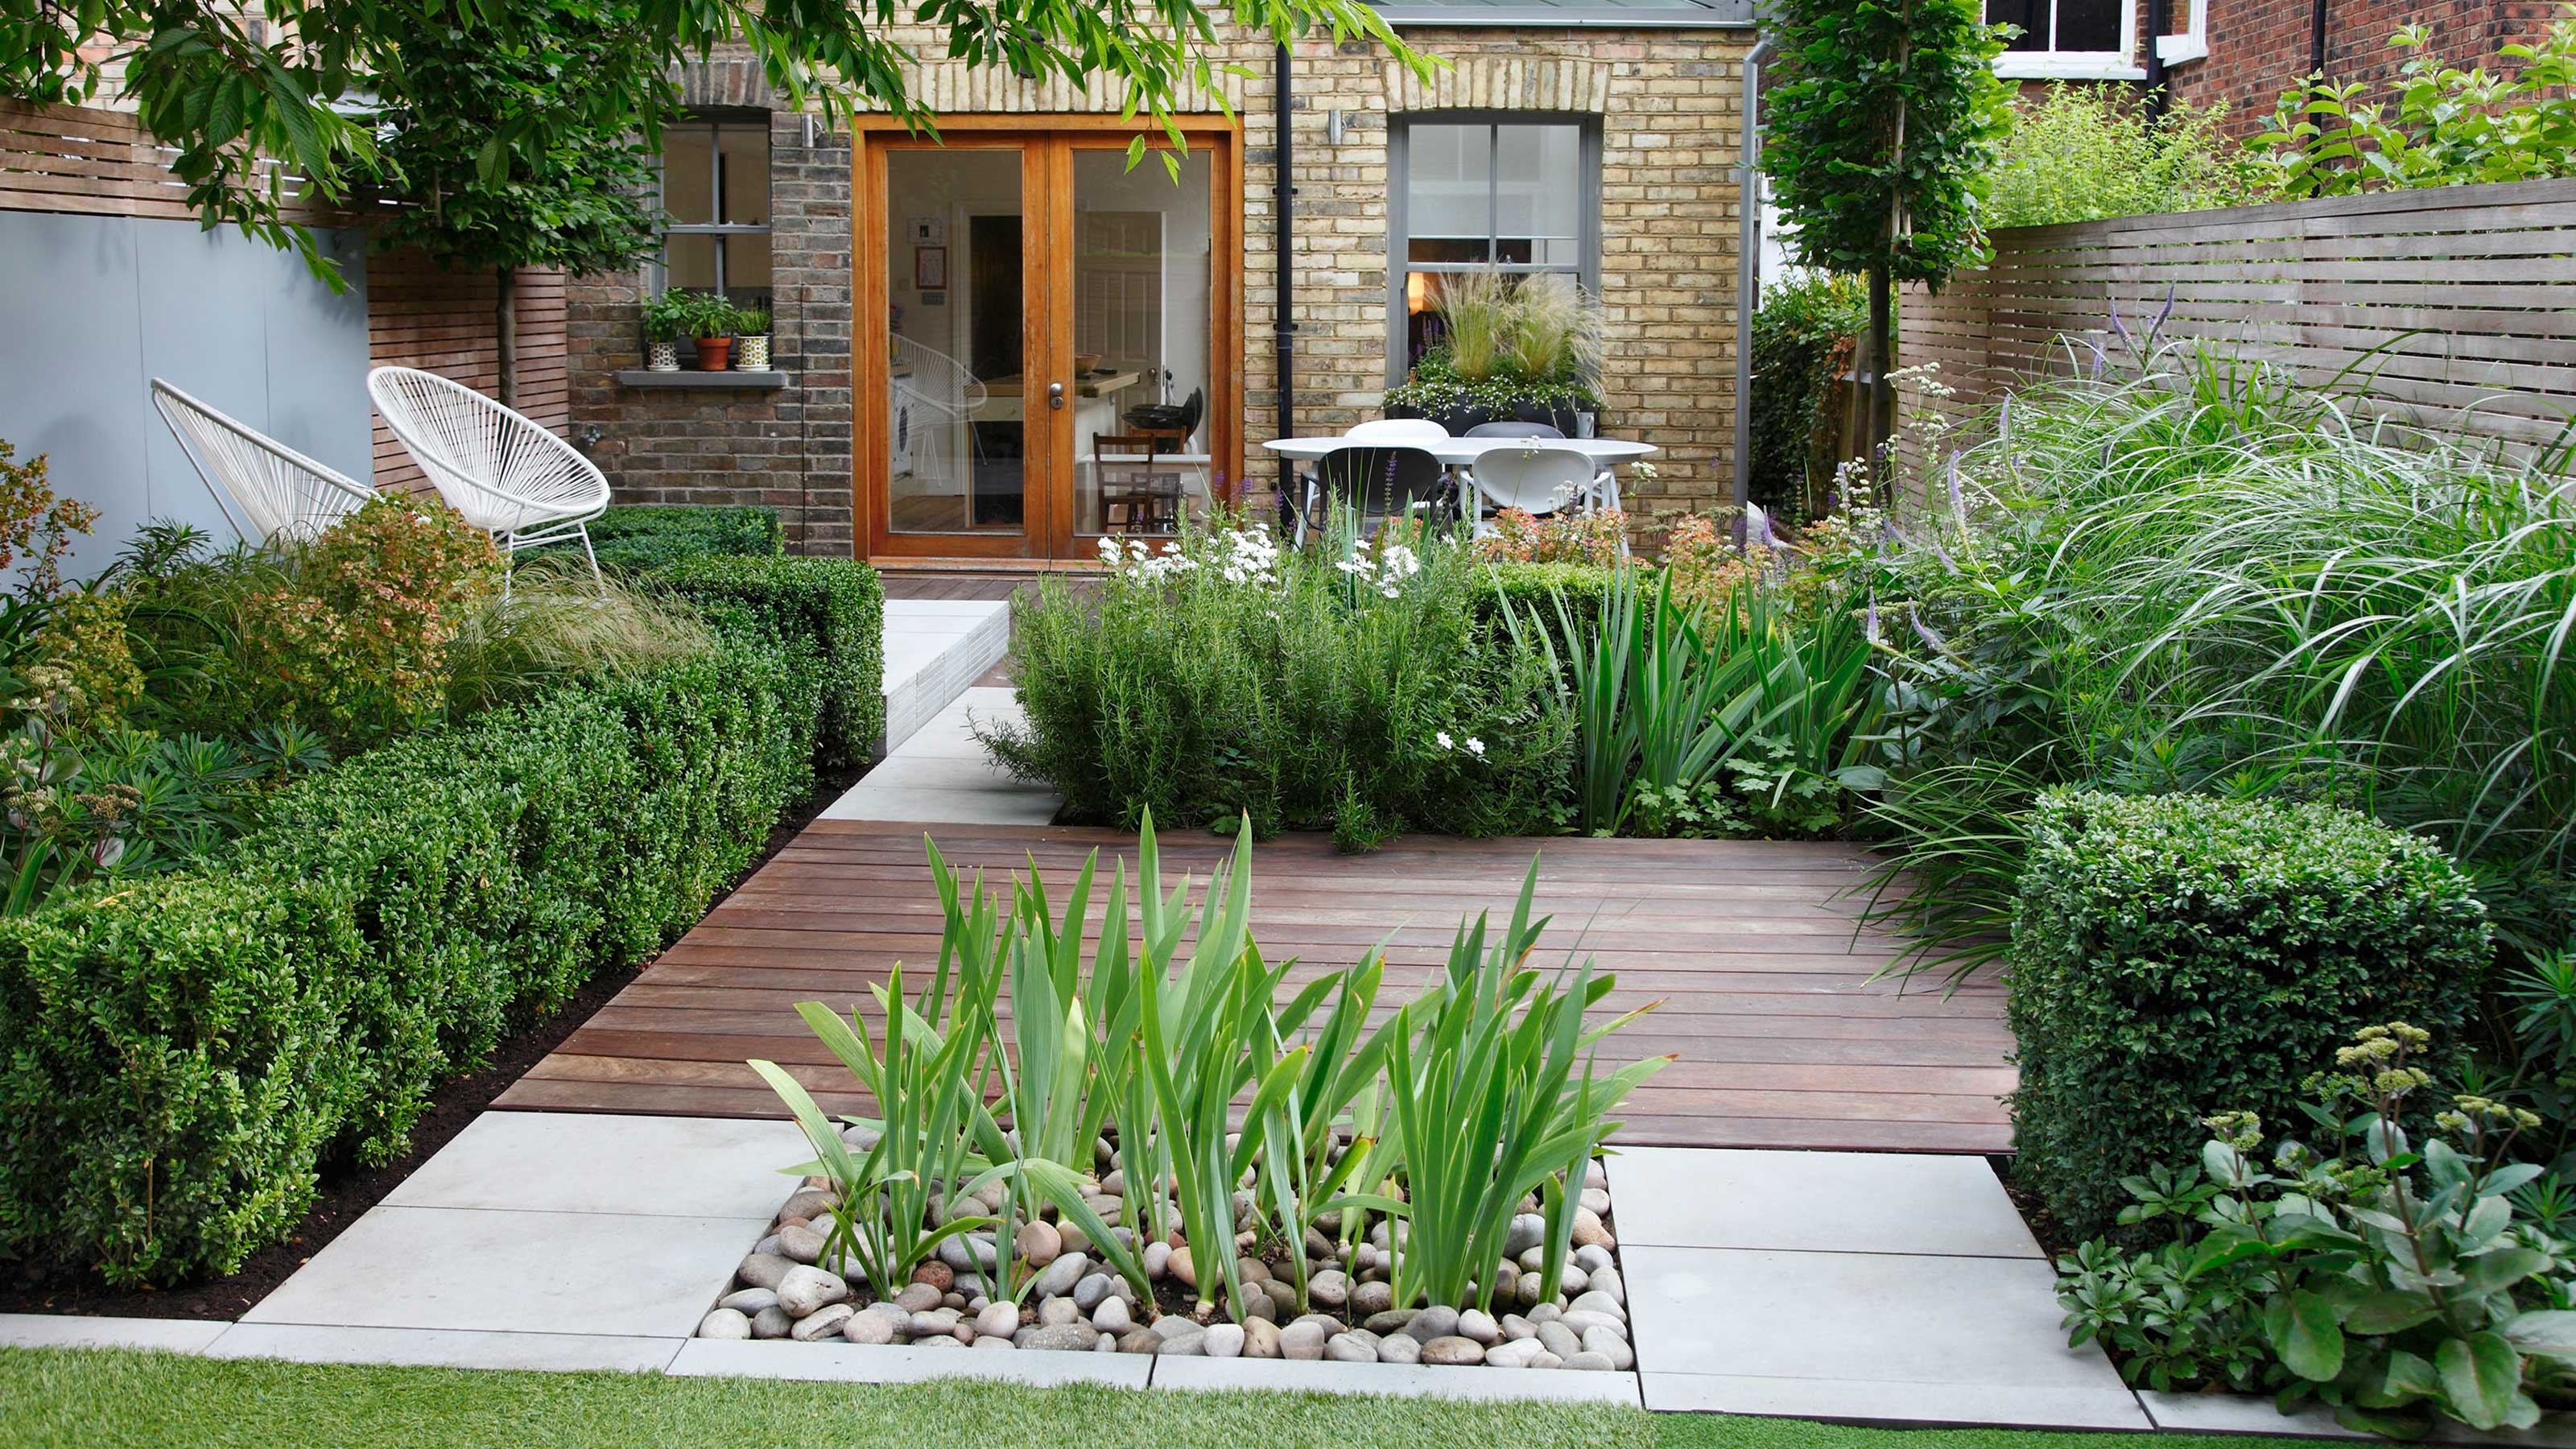  Small Garden Layout Ideas To Consider Gardeningetc - Garden Design Ideas For Small Garden